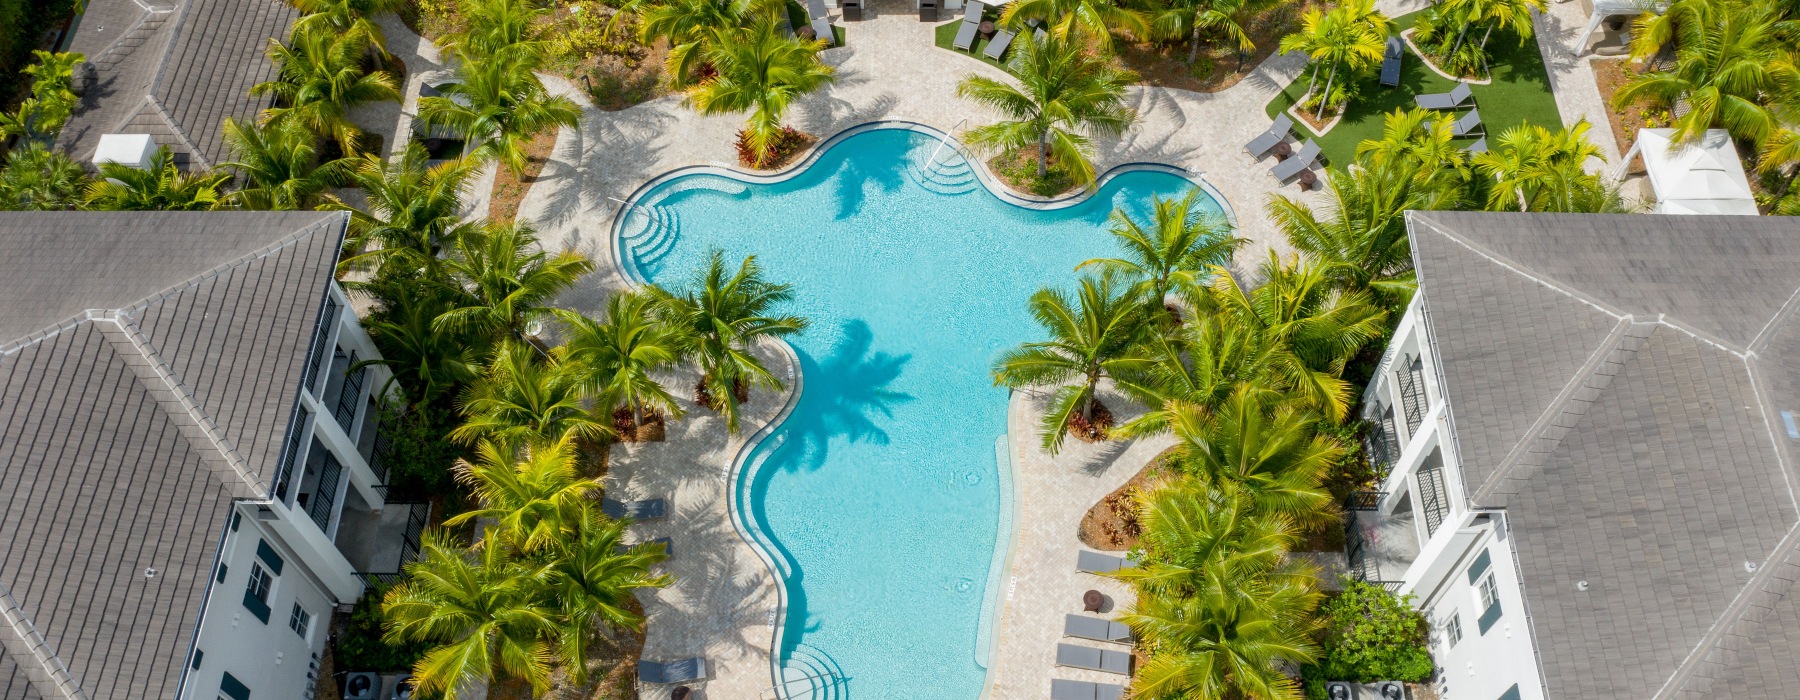 Luxury pool view